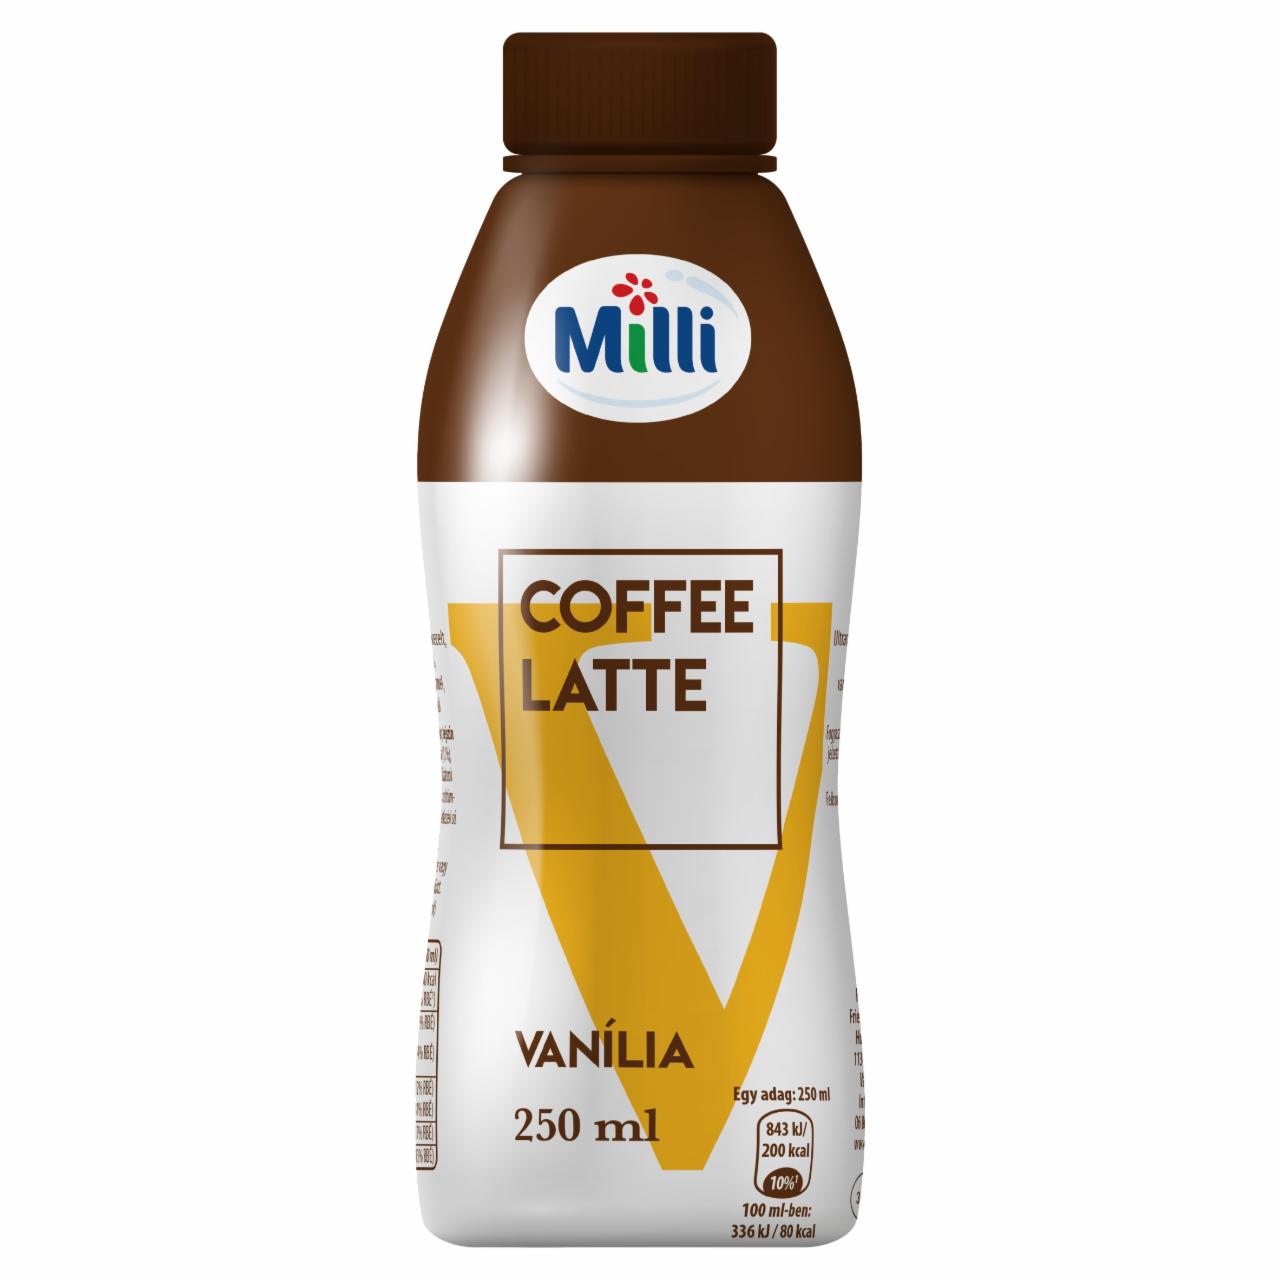 Képek - Milli Coffee Latte Vanília Latte vaníliaízű tejeskávé tejszínnel 250 ml